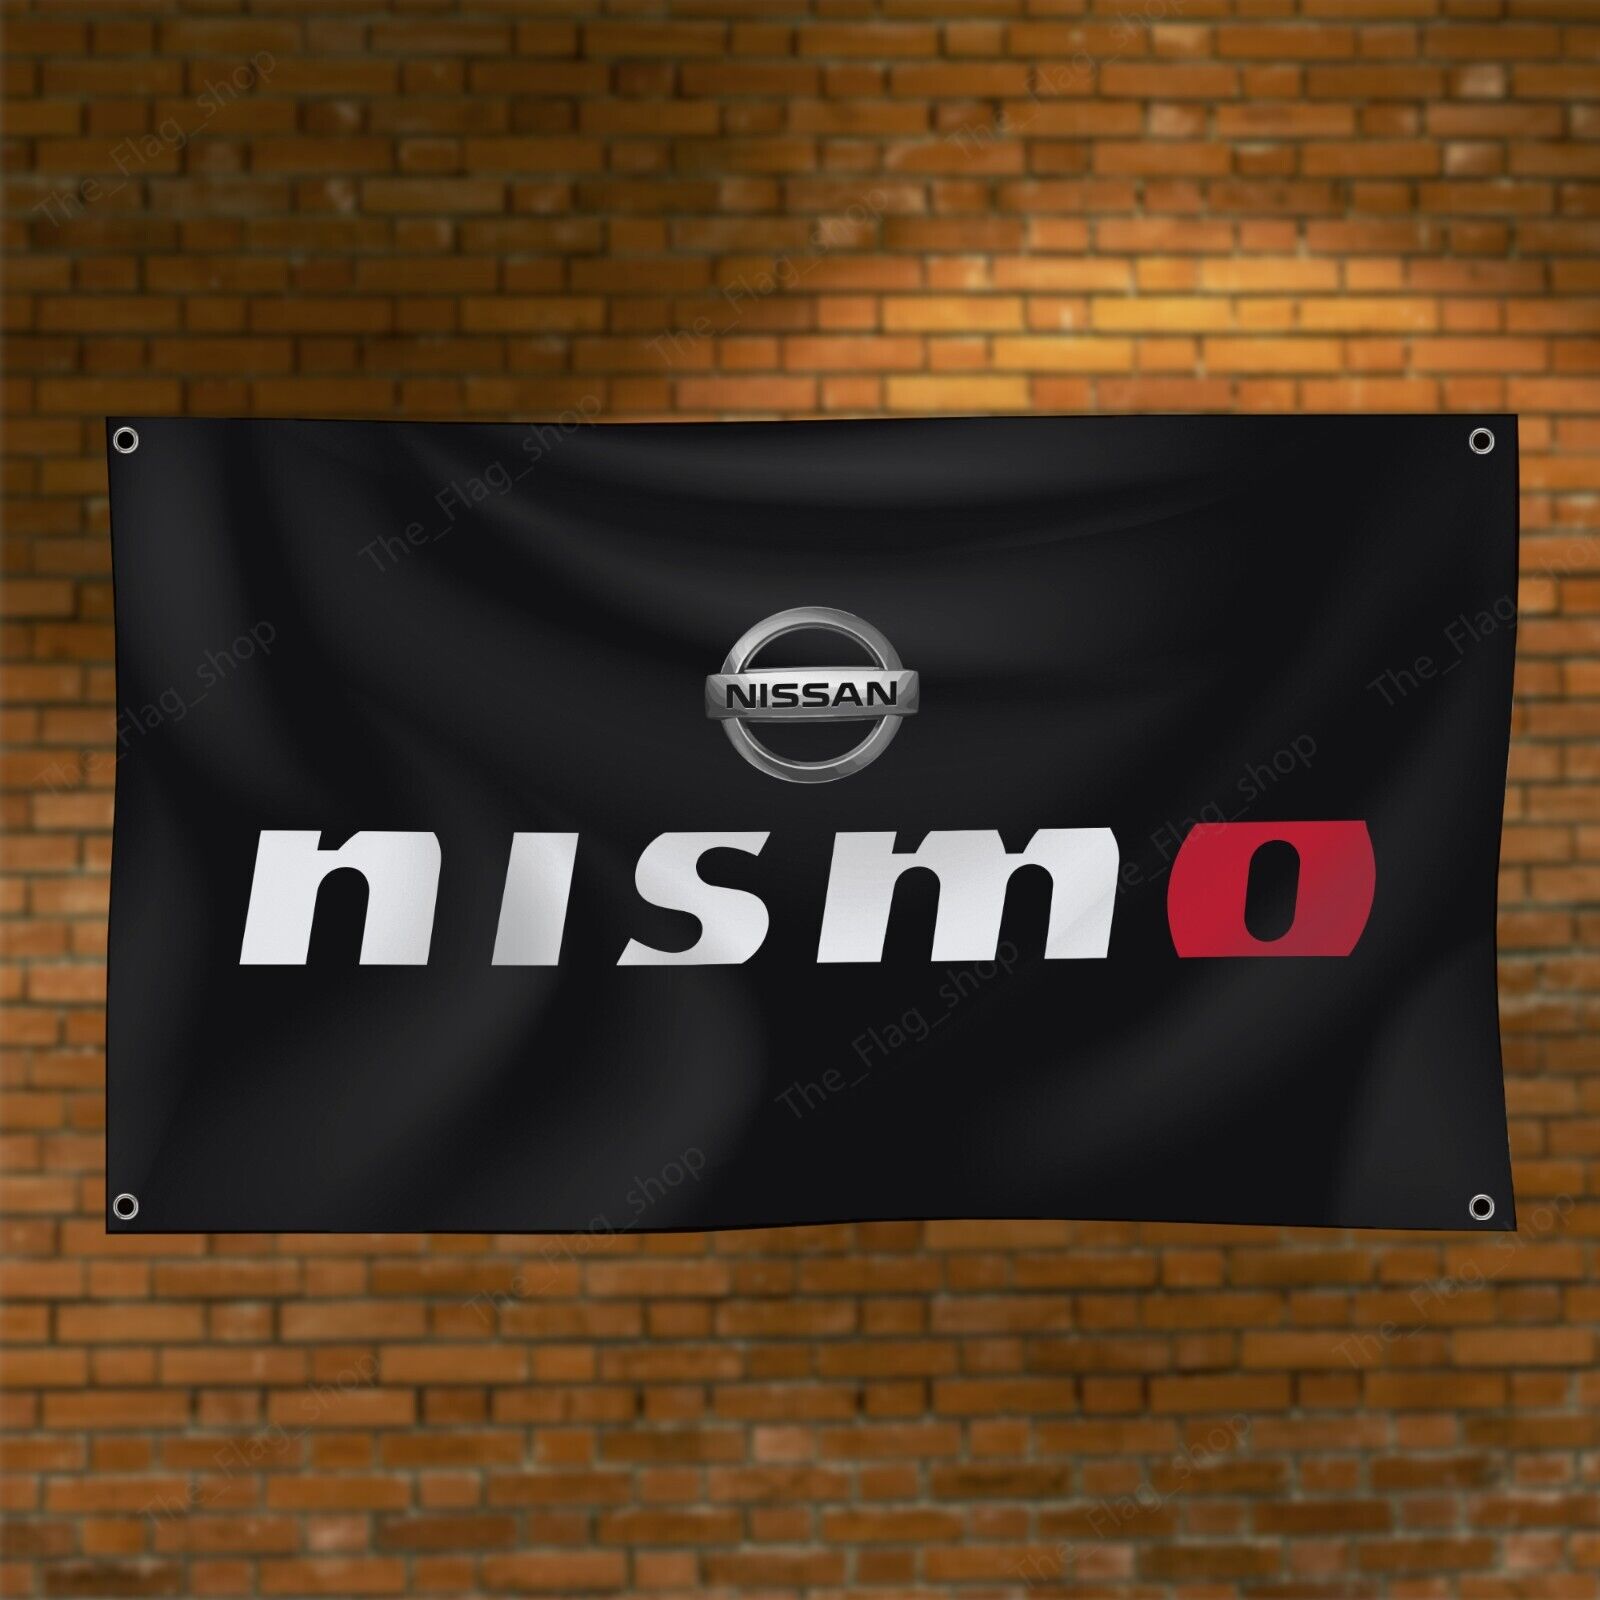 Nissan NISMO Banner 3x5 FT Racing Car Show Flag Garage Man Cave Wall Decor Sign